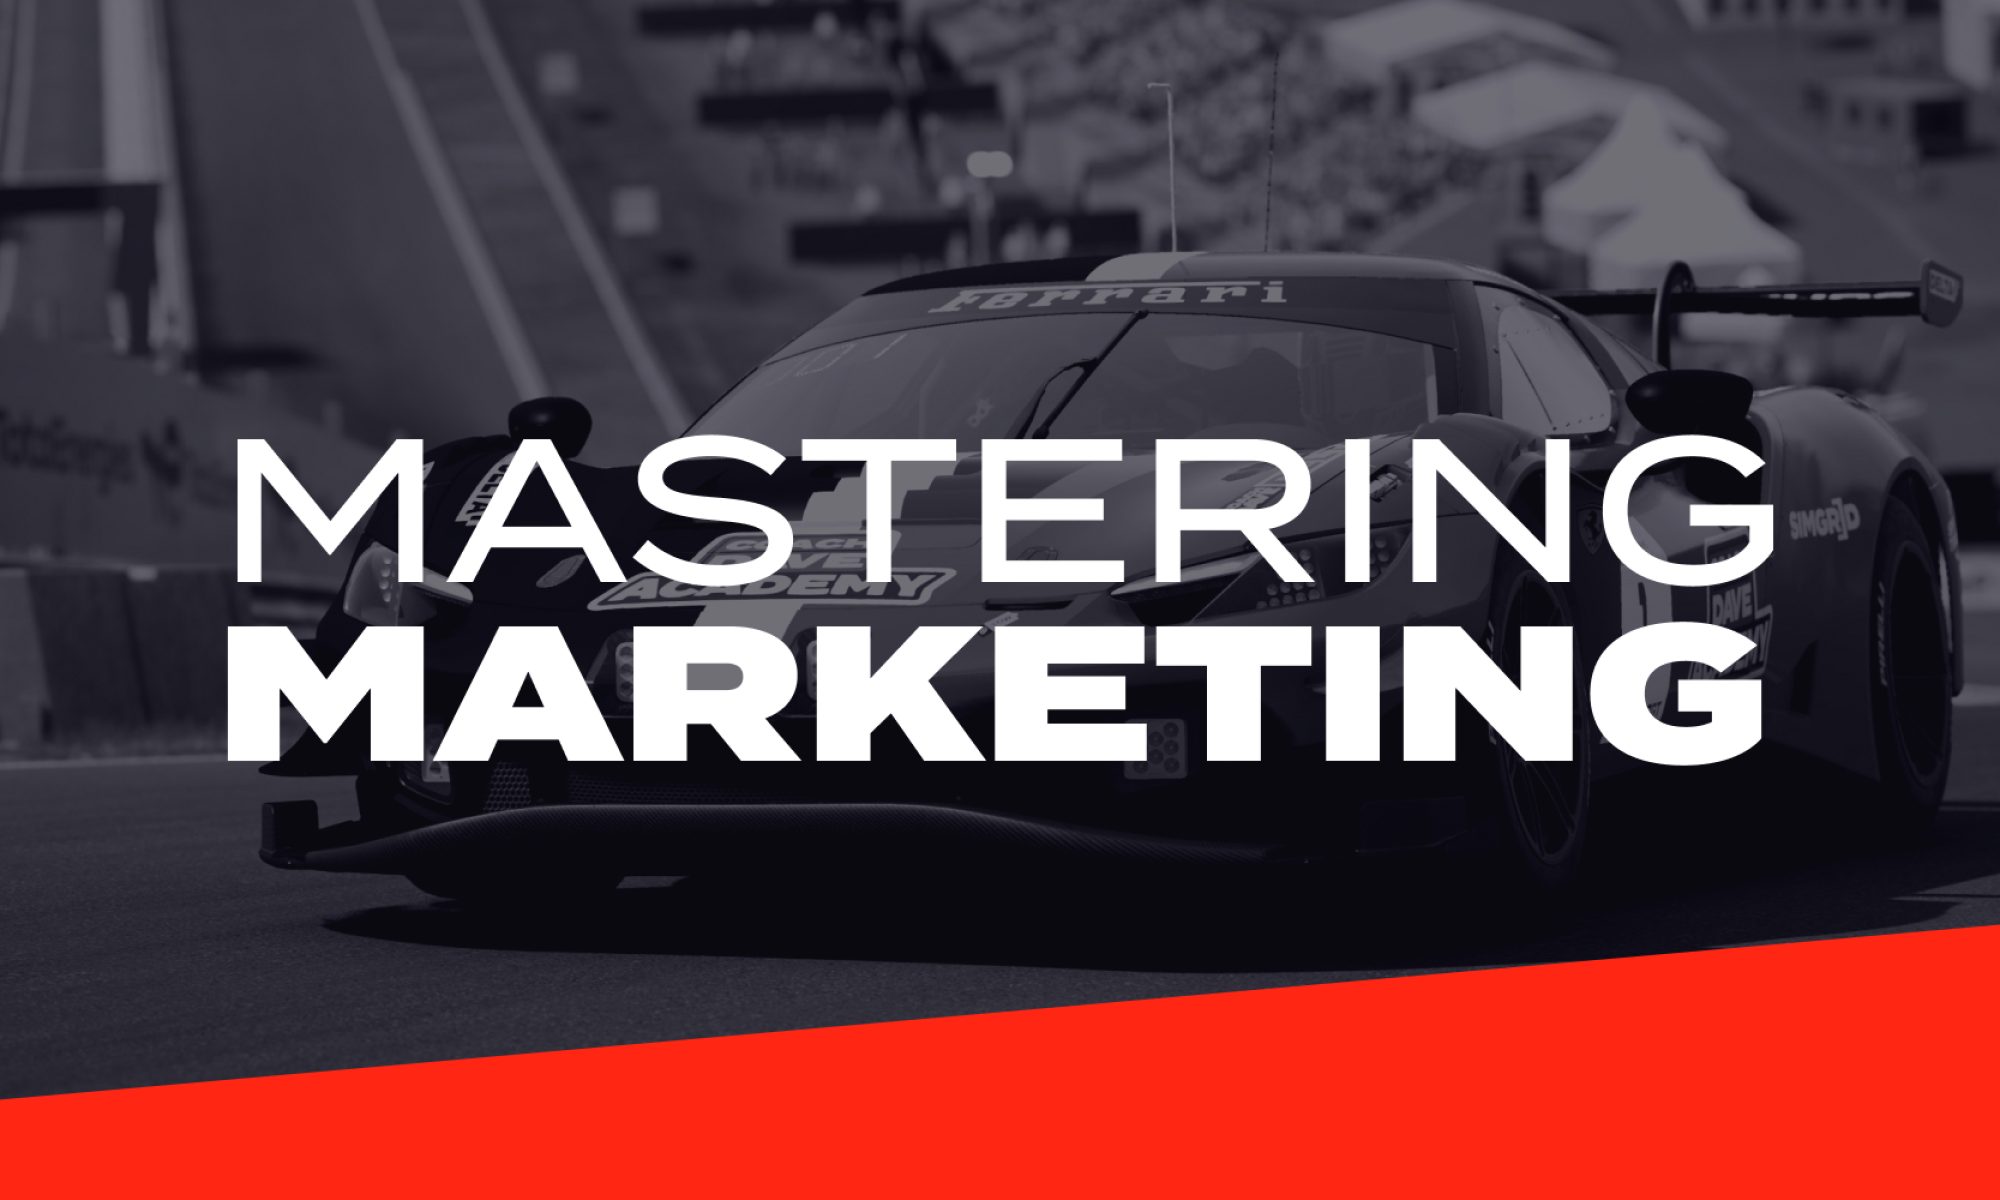 MarketingMaster